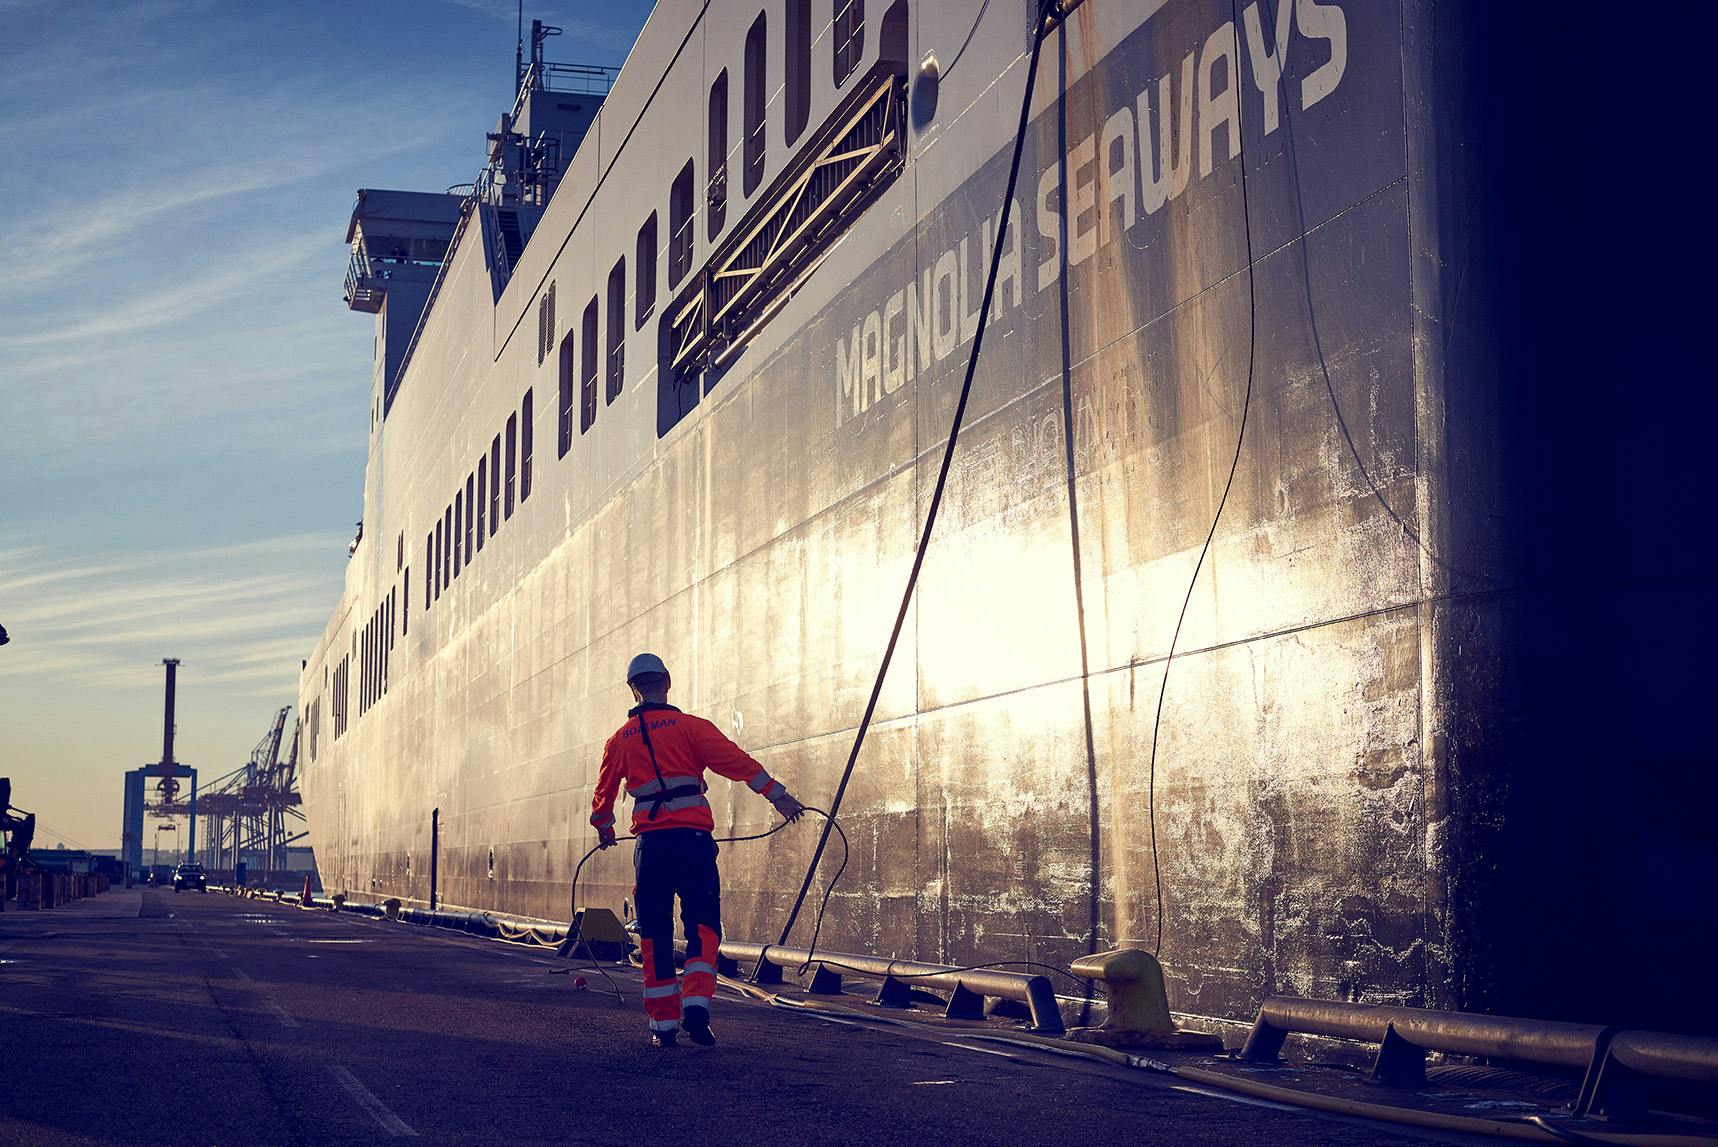 DFDS ship Magnolia Seaways